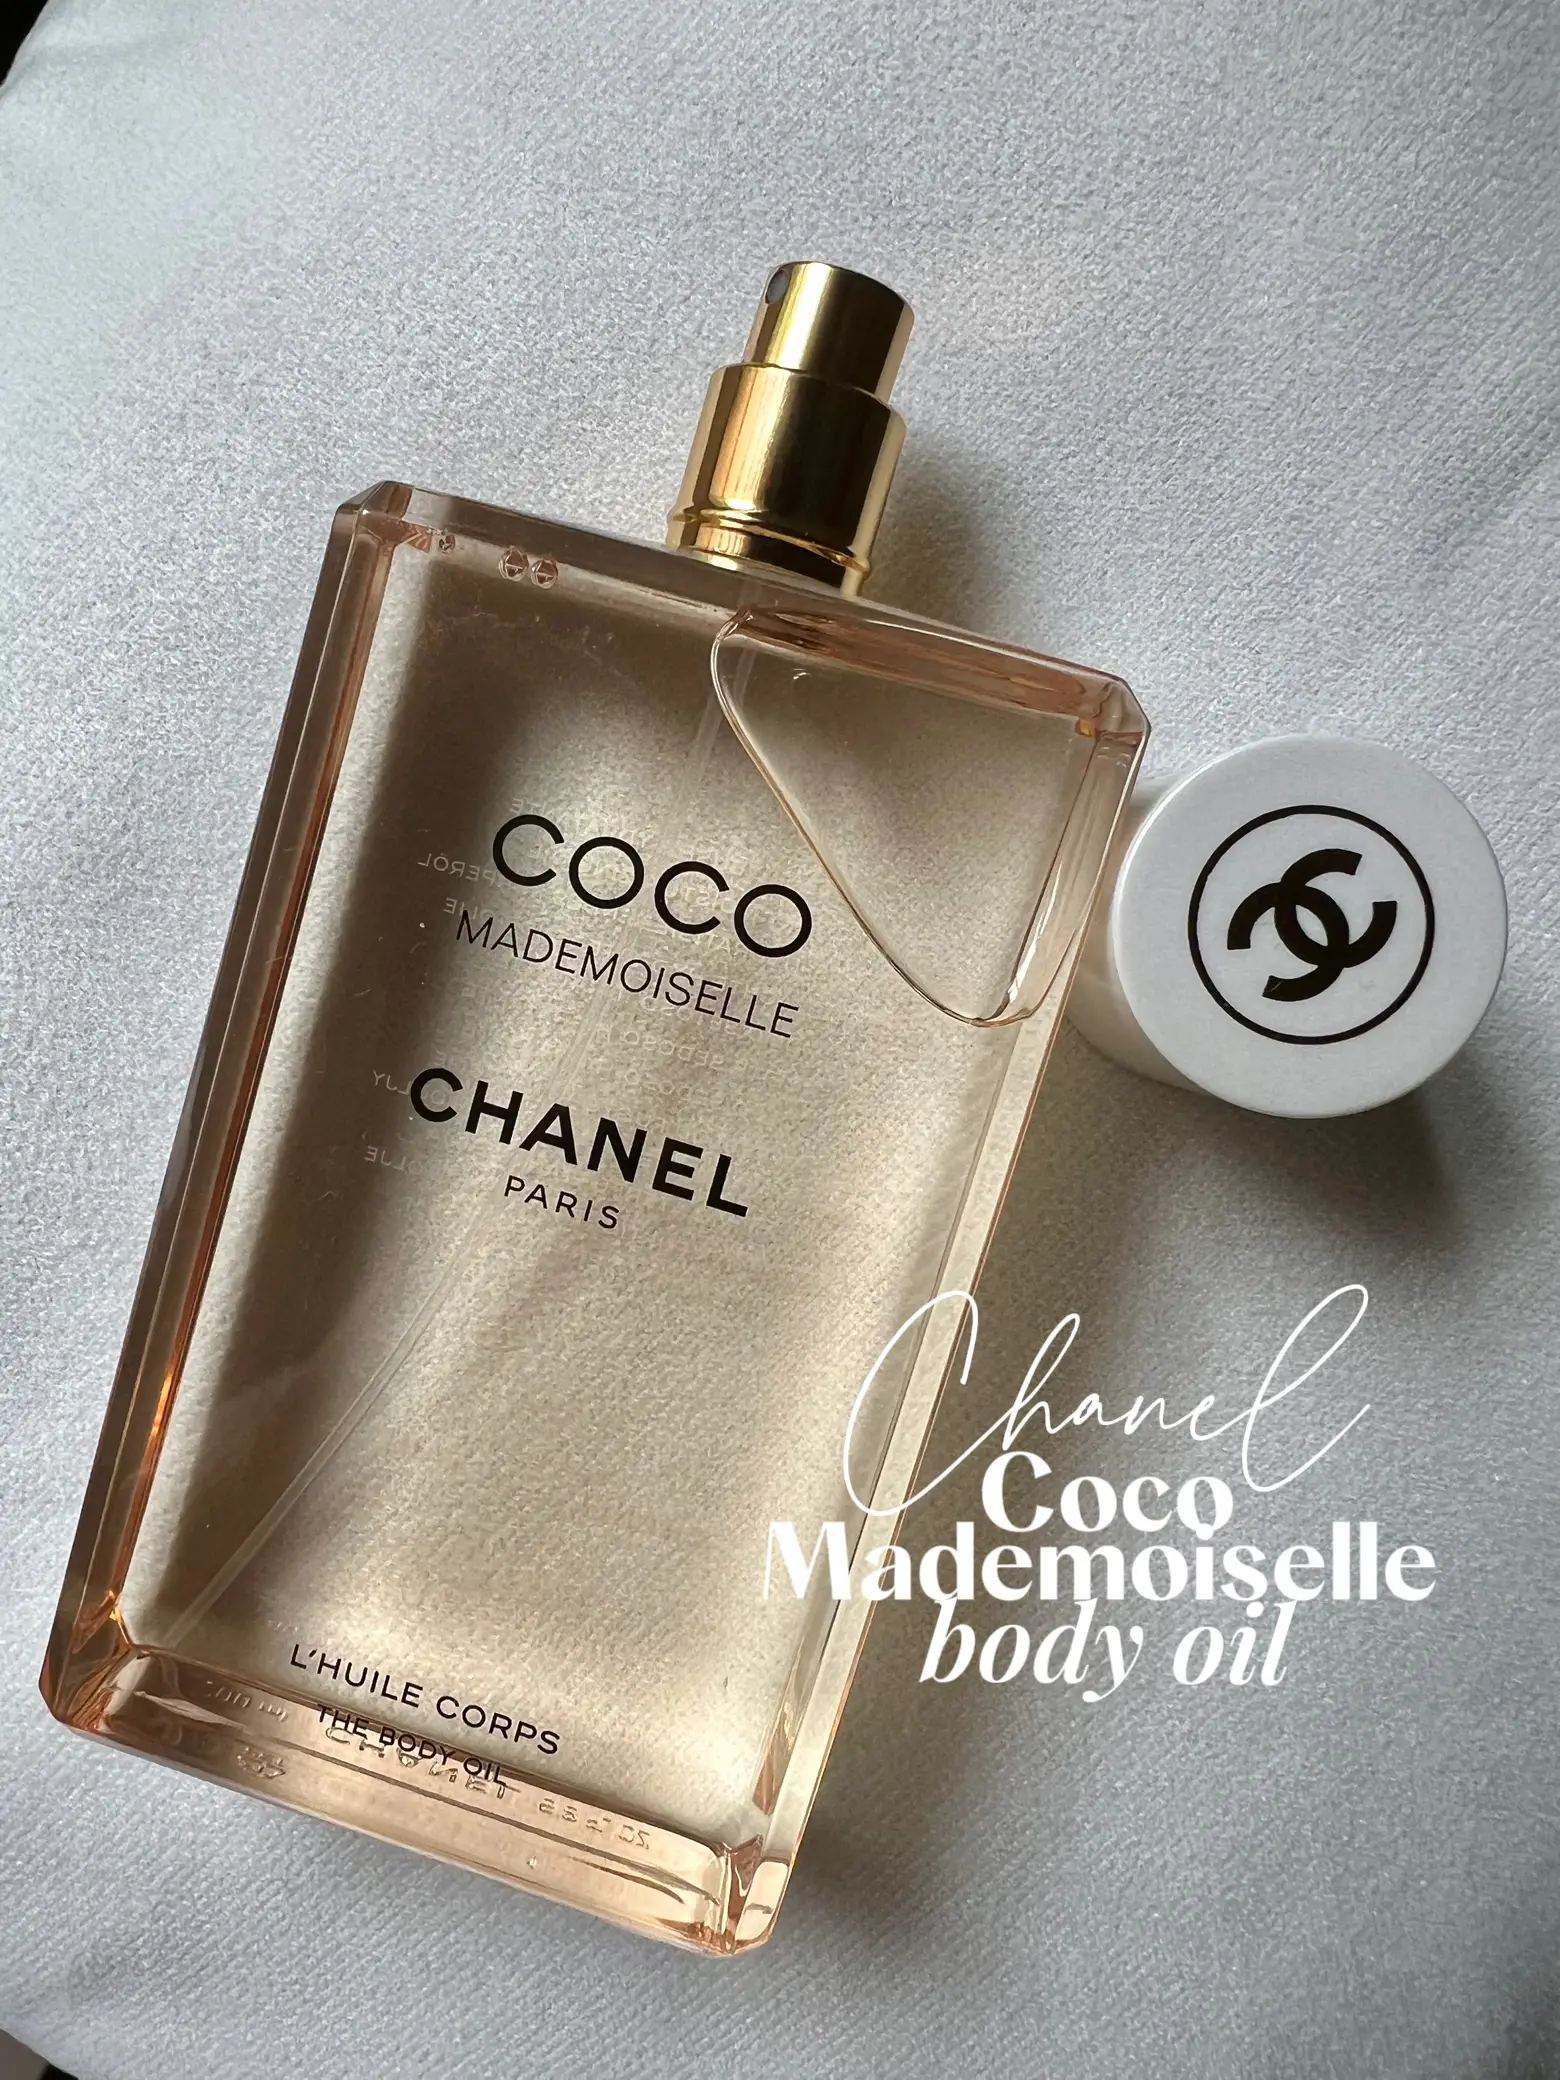 Chanel Coco Mademoiselle Body Oil, Galeri disiarkan oleh azmiraeriza